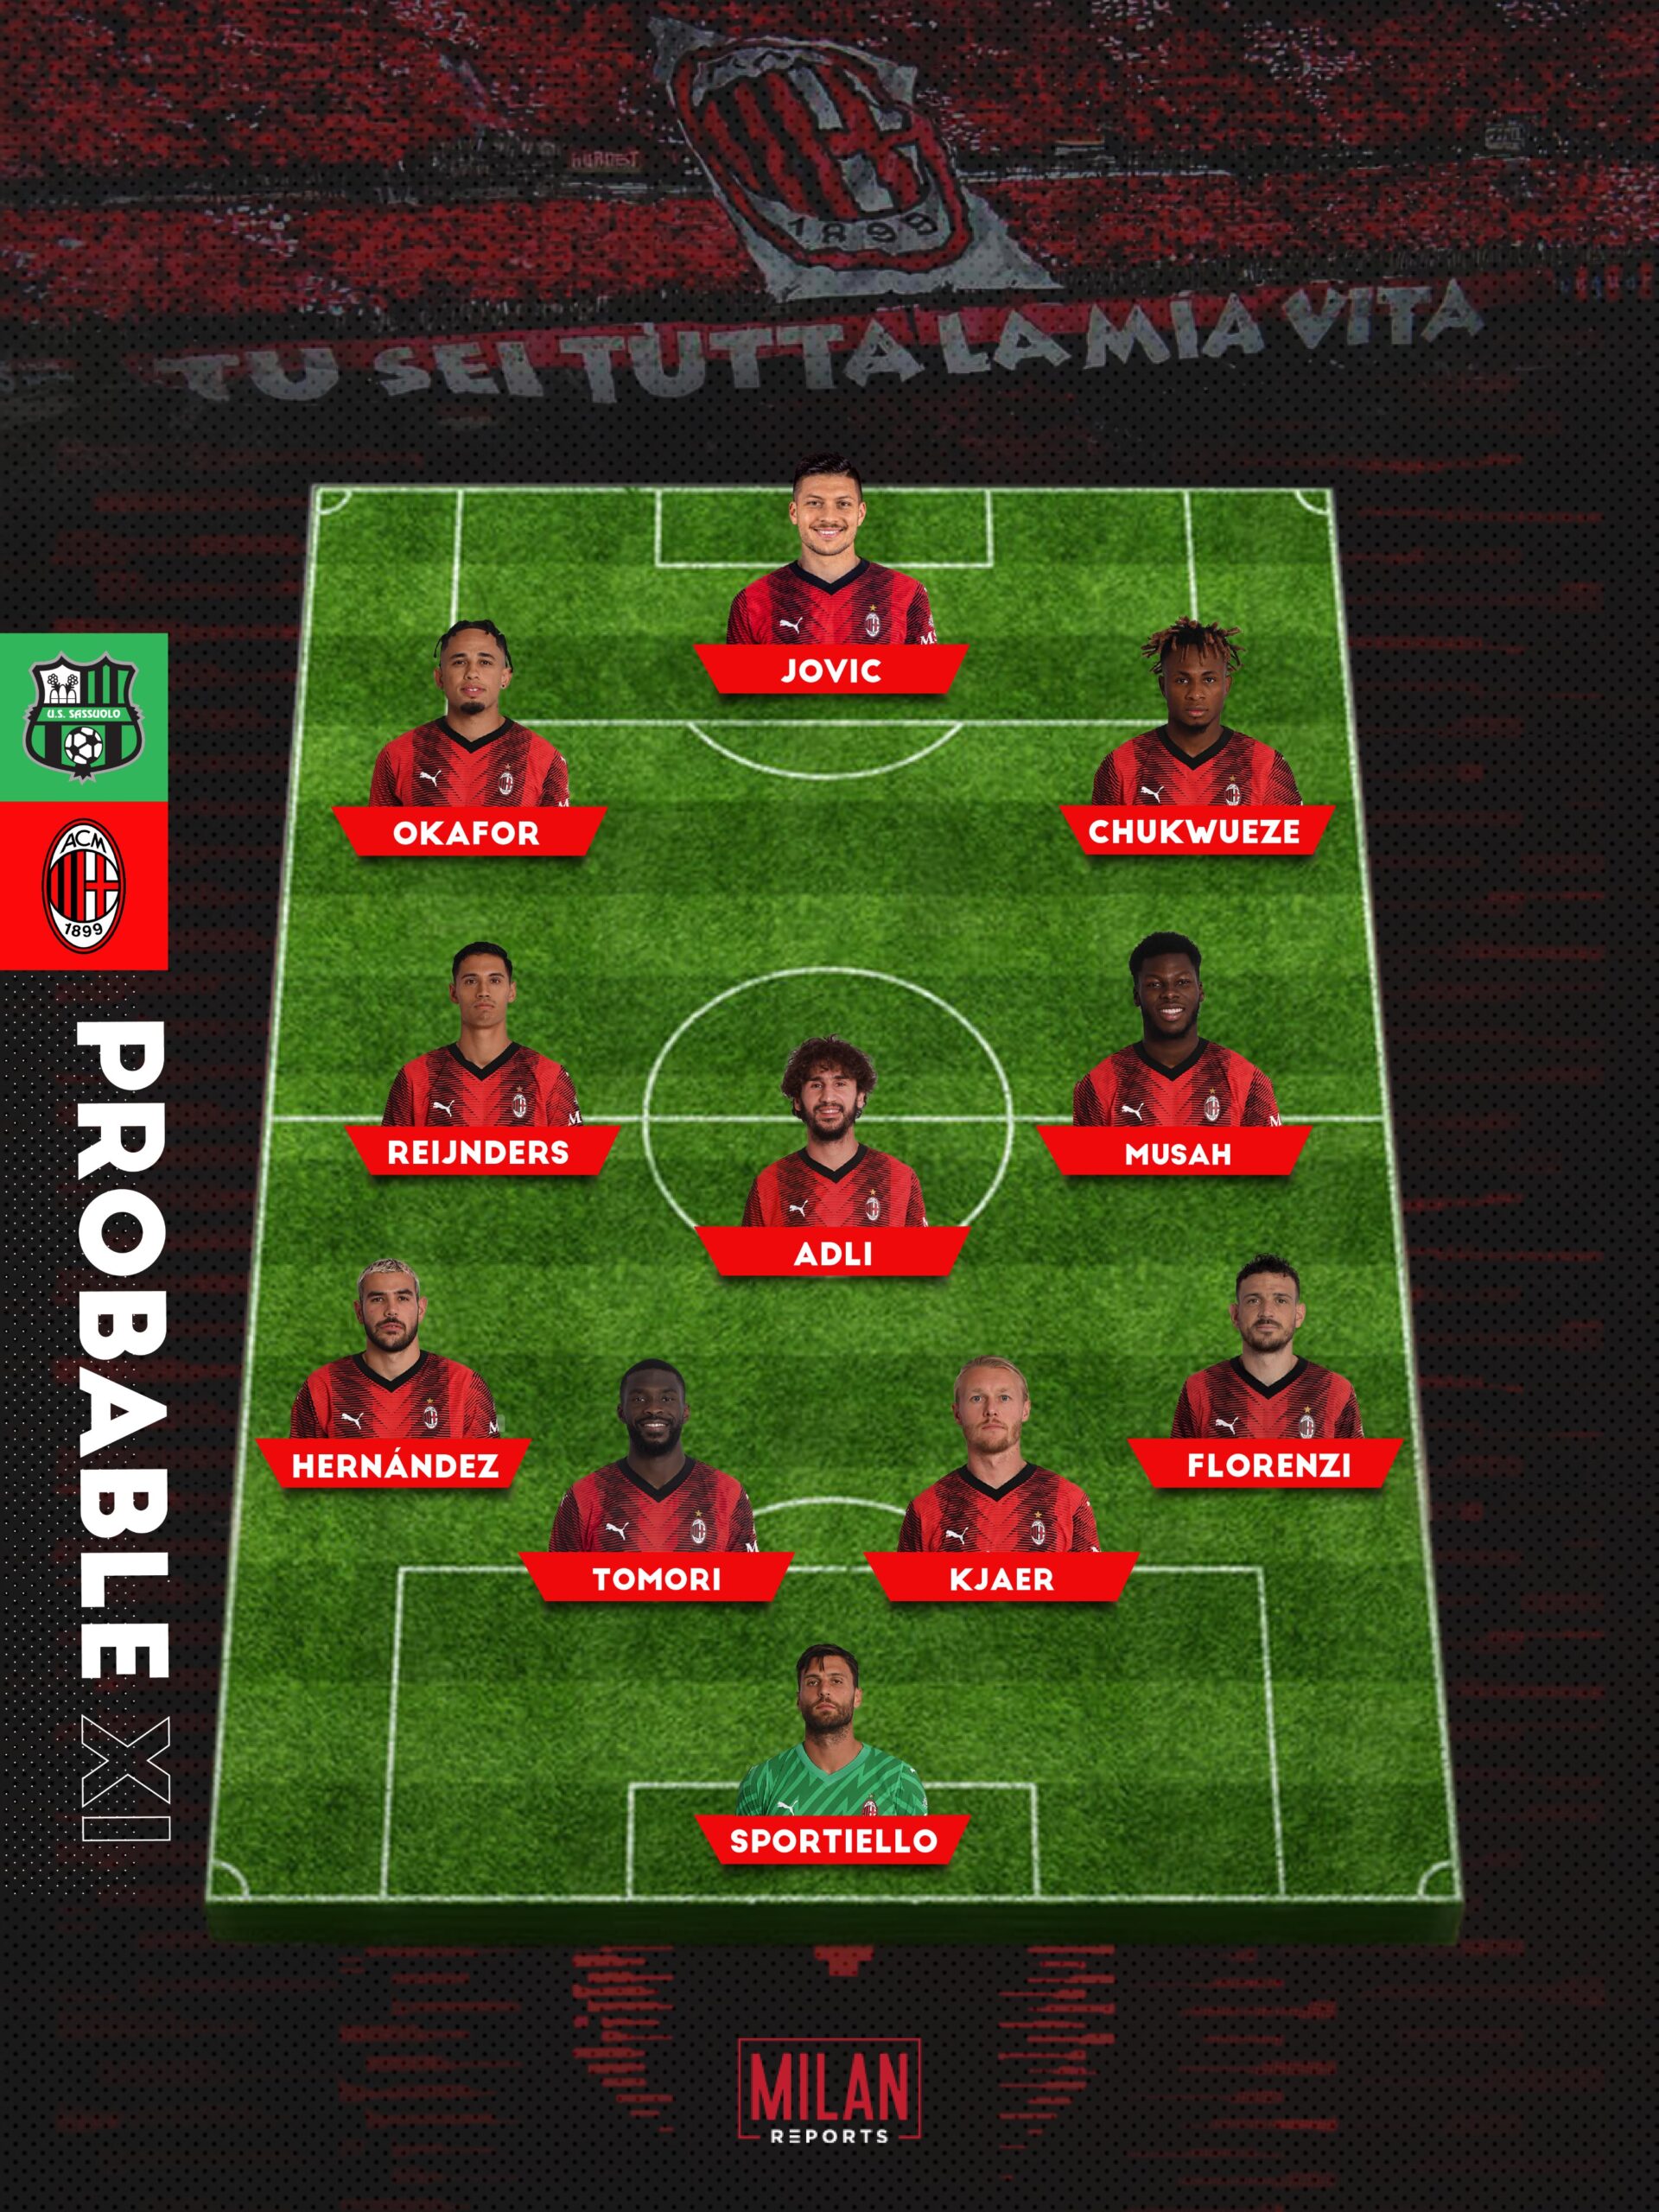 AC Milan possible lineup vs Sassuolo (Milanreports.com)